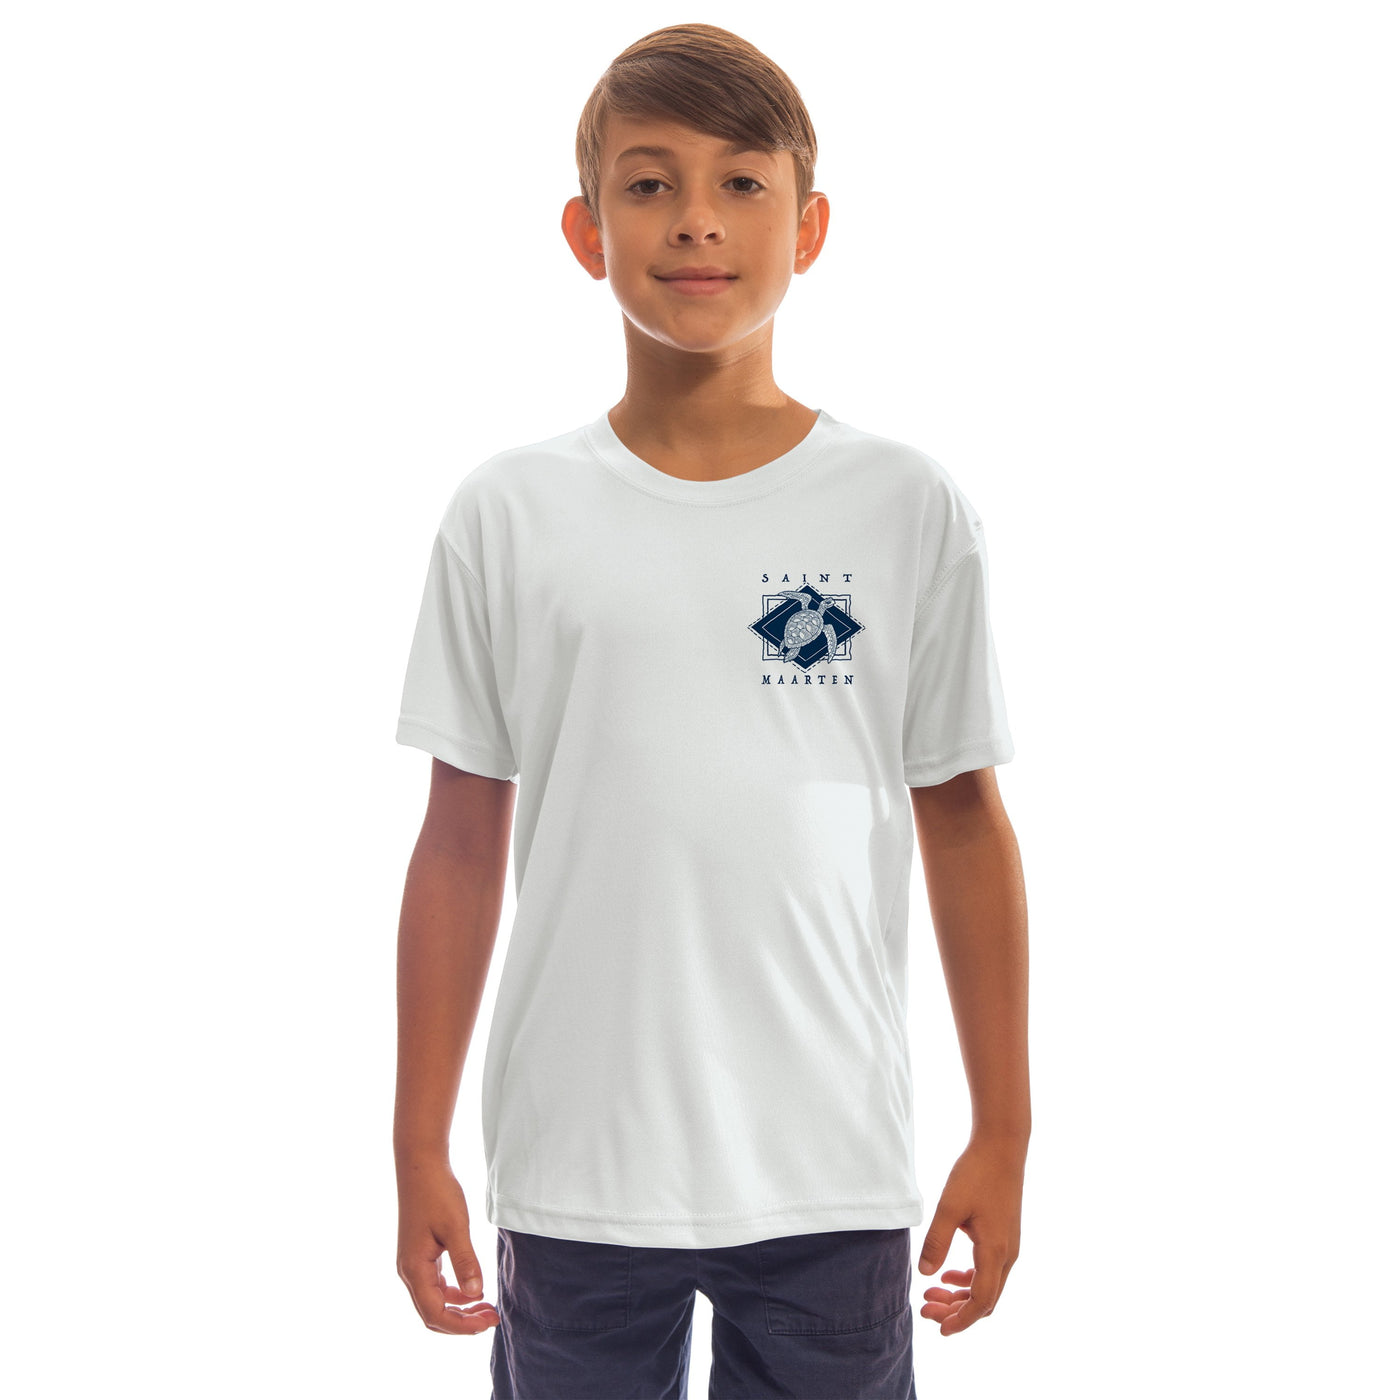 Coastal Quads Saint Maarten Youth UPF 50+ UV/Sun Protection Long Sleeve T-Shirt